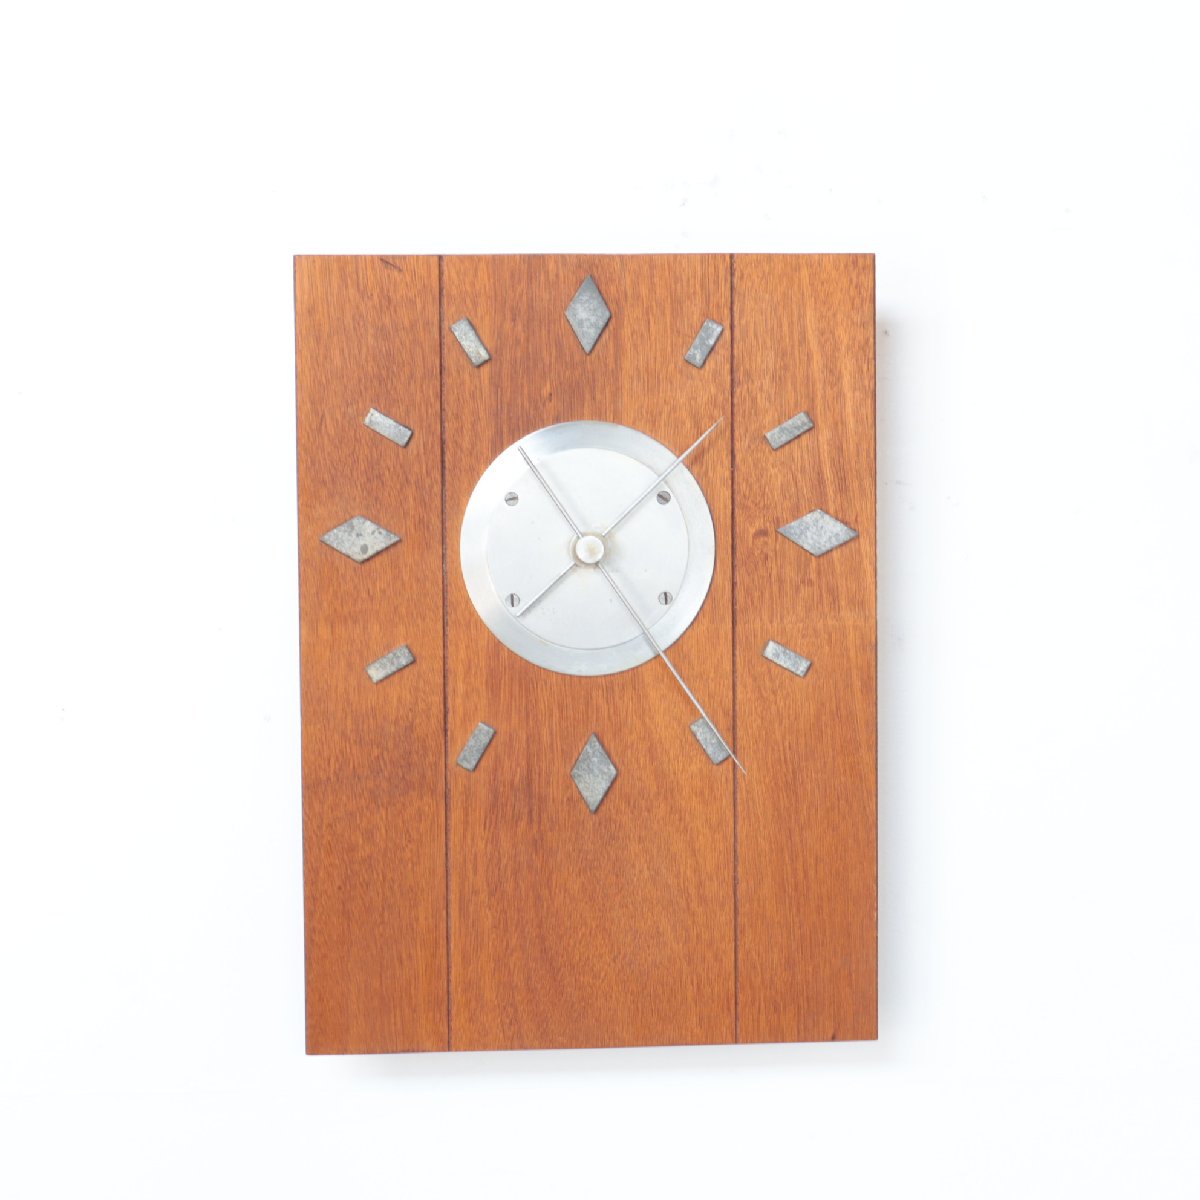 60s ミッドセンチュリー ウォールクロック アメリカ 時計 壁掛け時計